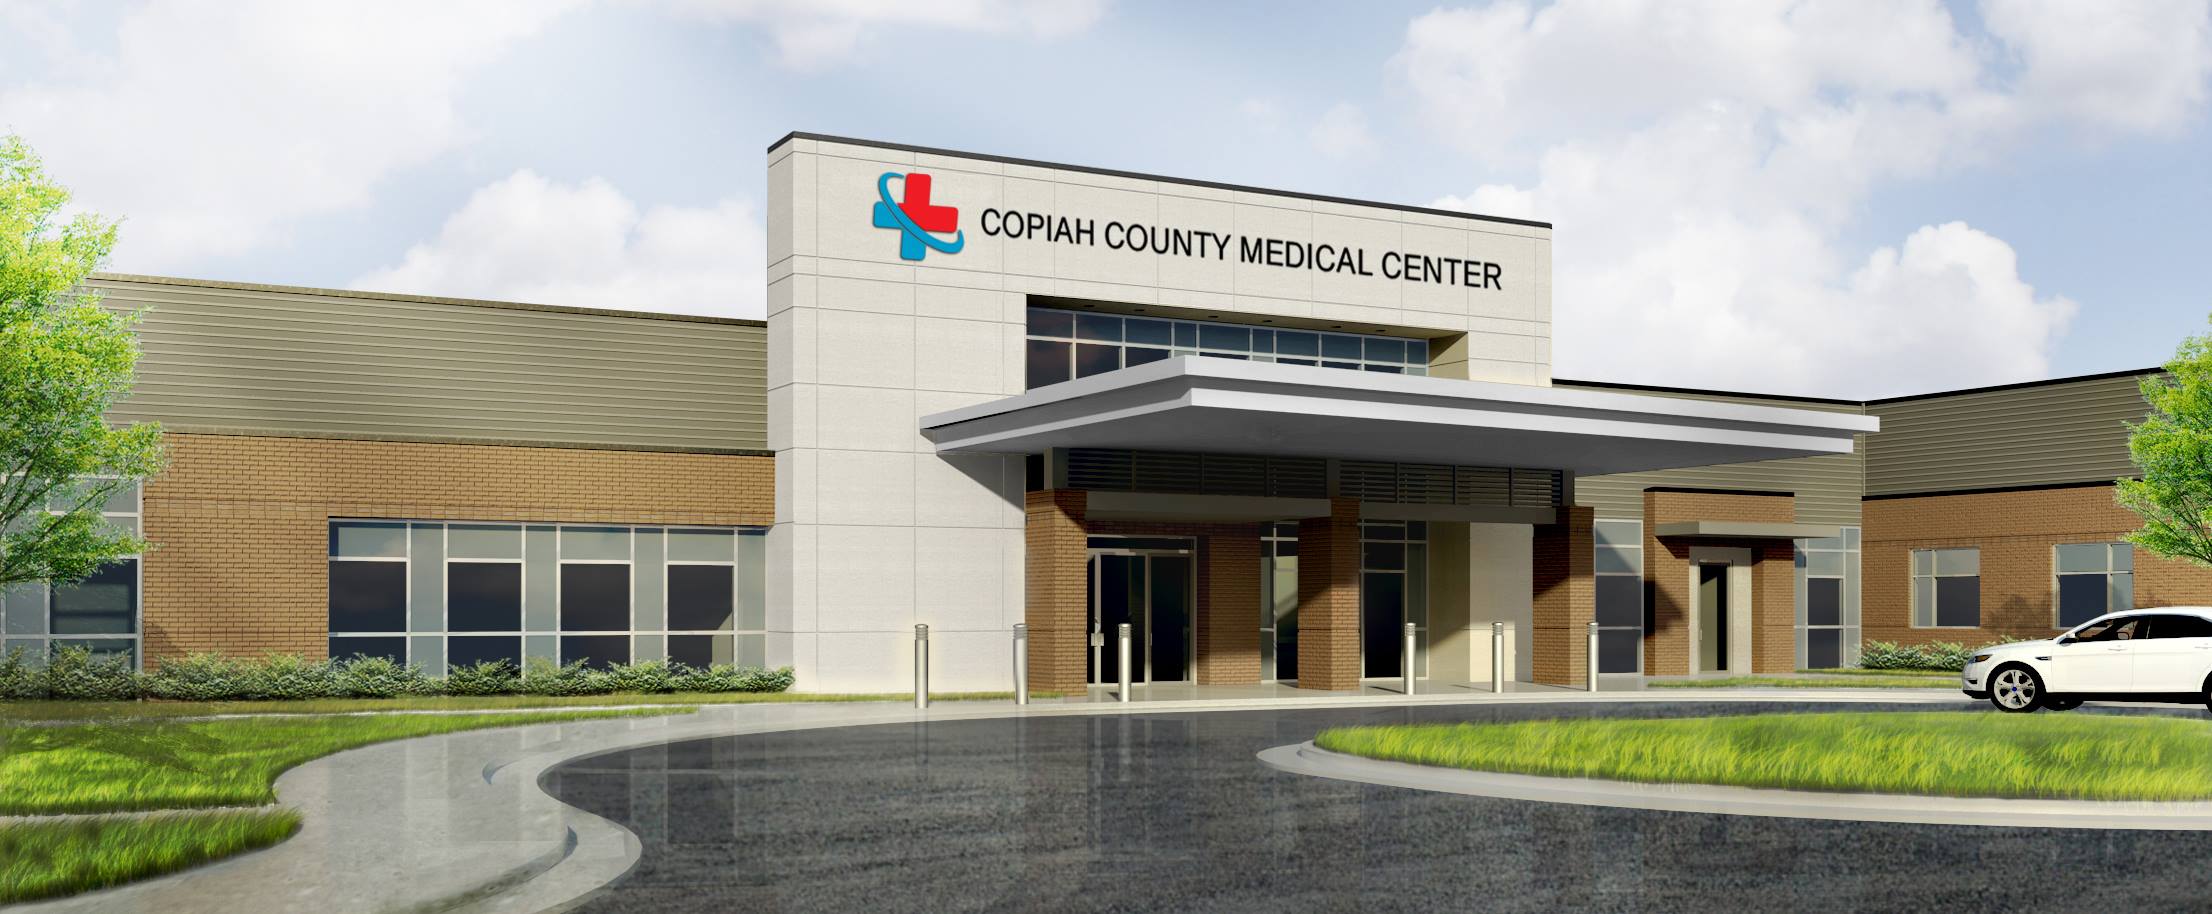 Copiah County Medical Center